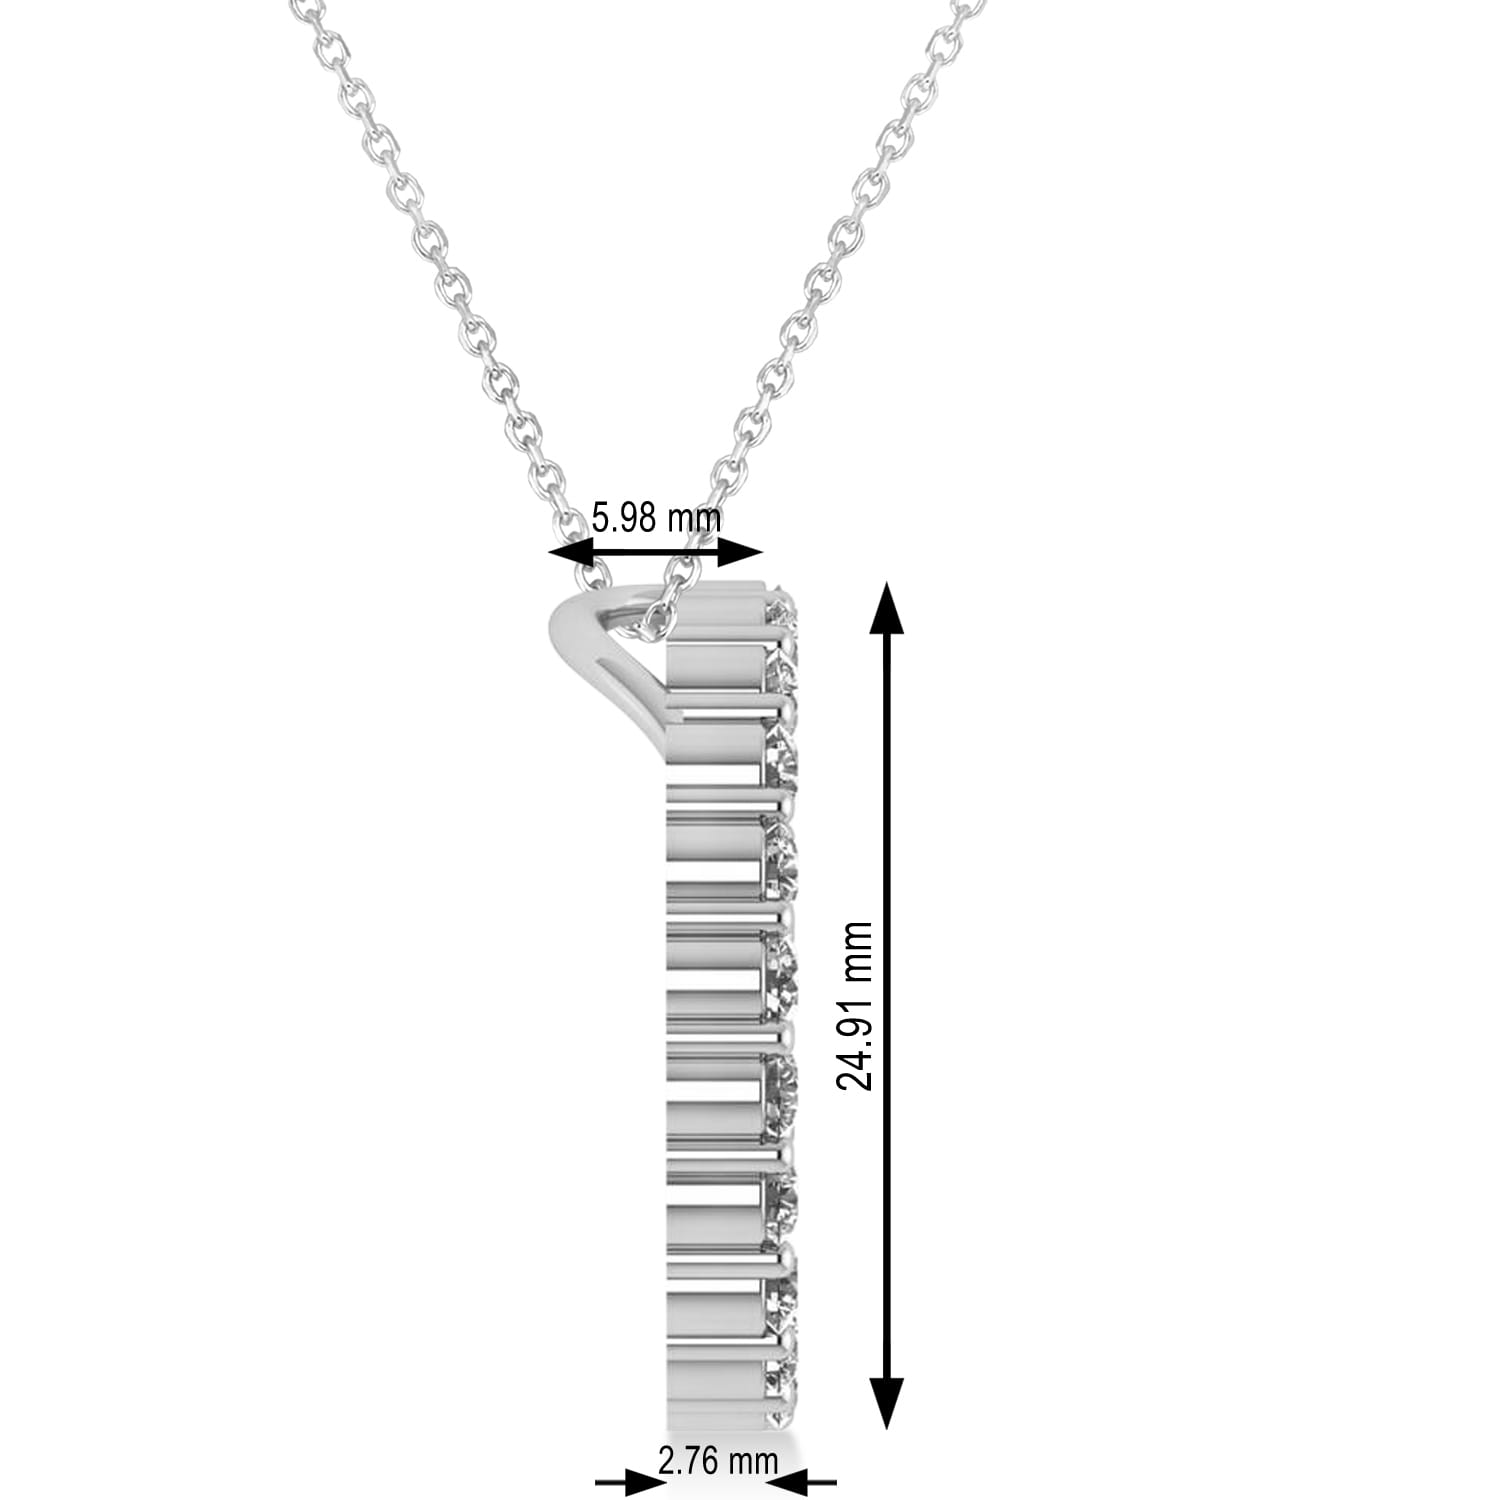 Moissanite Circle of Life Pendant Necklace 14k White Gold (2.10ct)